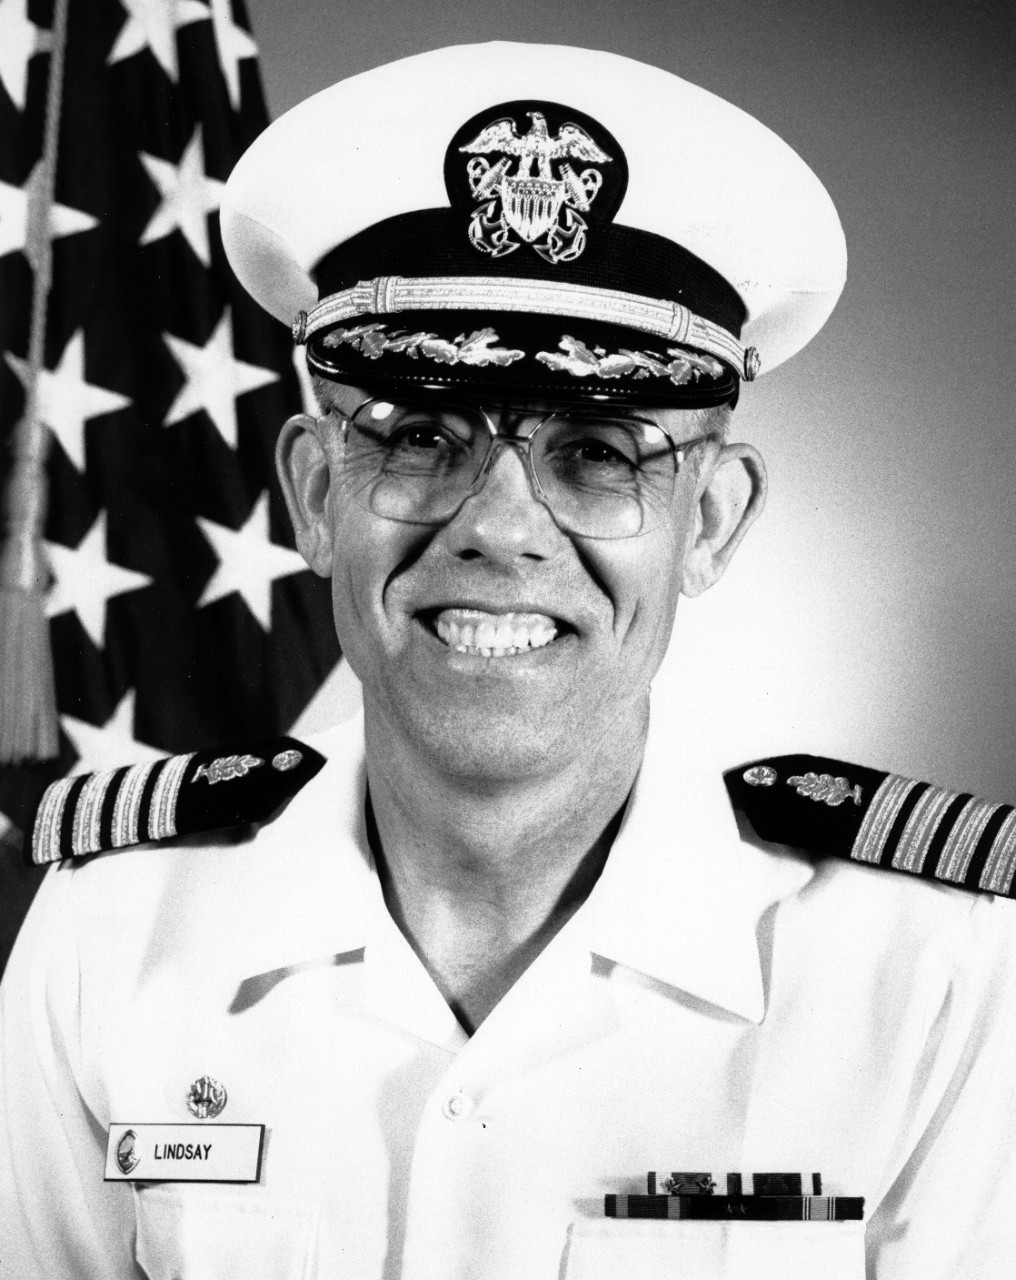 Captain Richard J. Lindsay, MSC, USN, Commanding Officer, U.S. Naval Hospital, Guam.